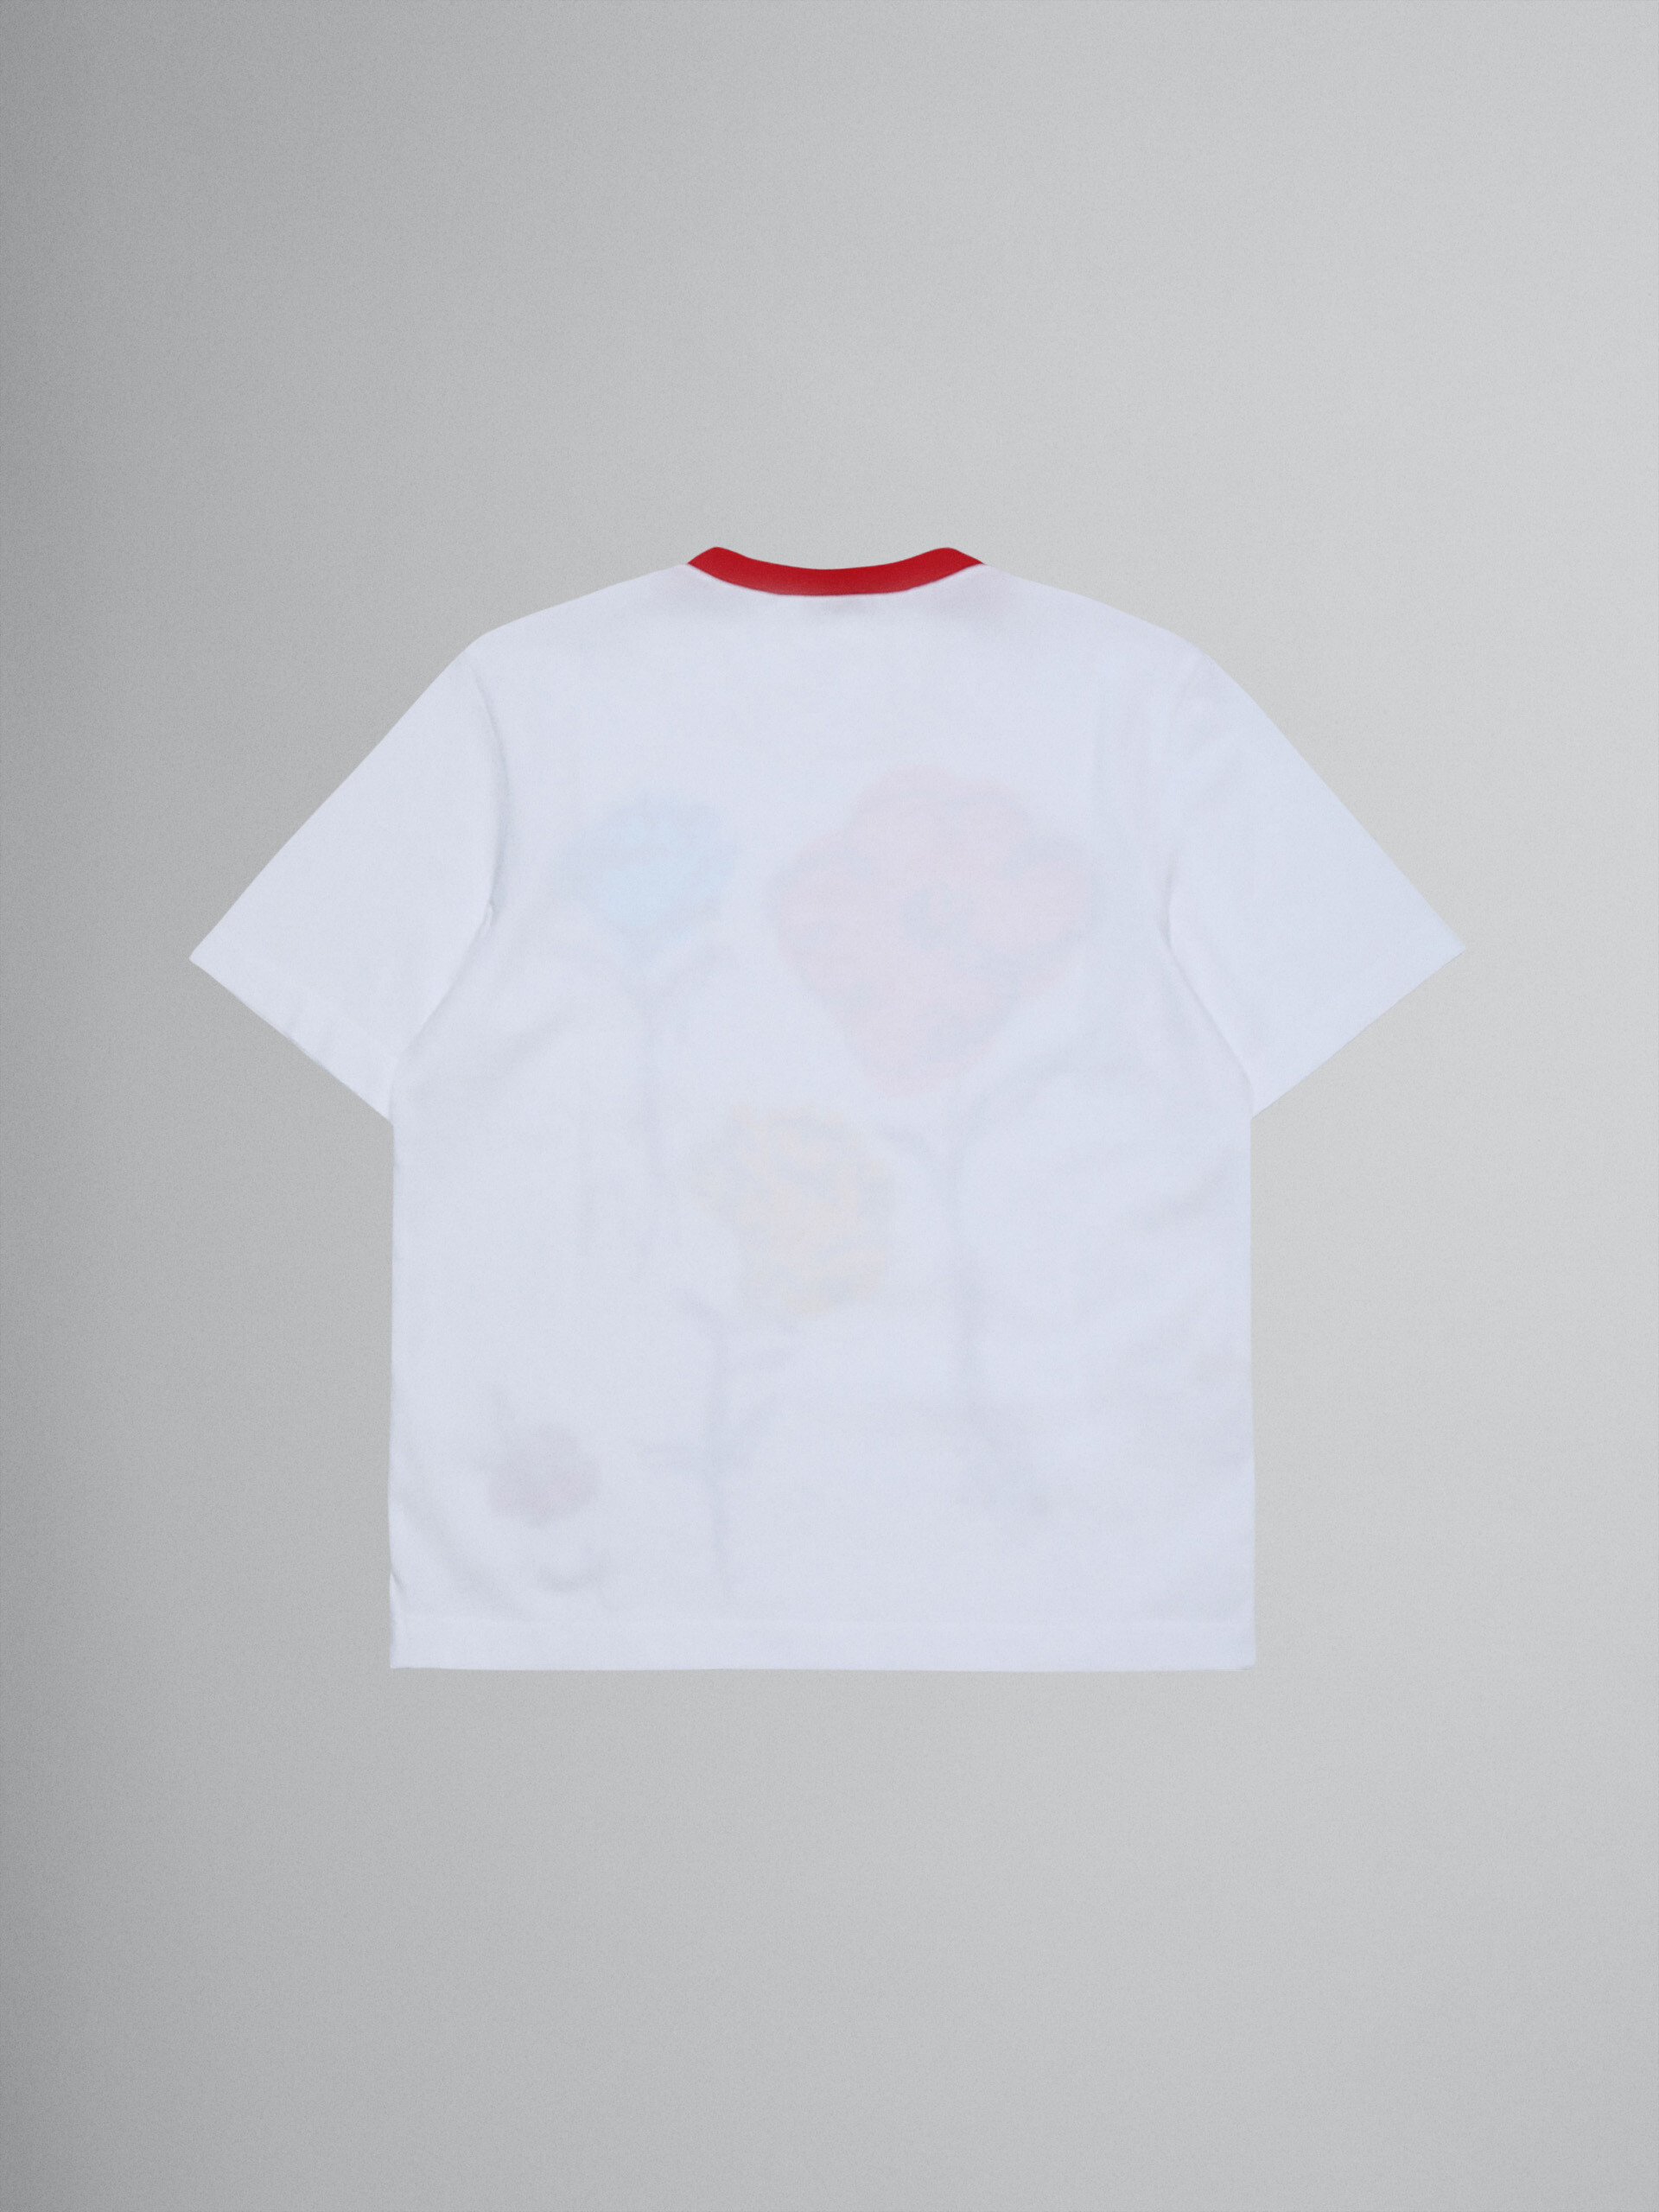 Cotton jersey flower T-shirt - T-shirts - Image 2